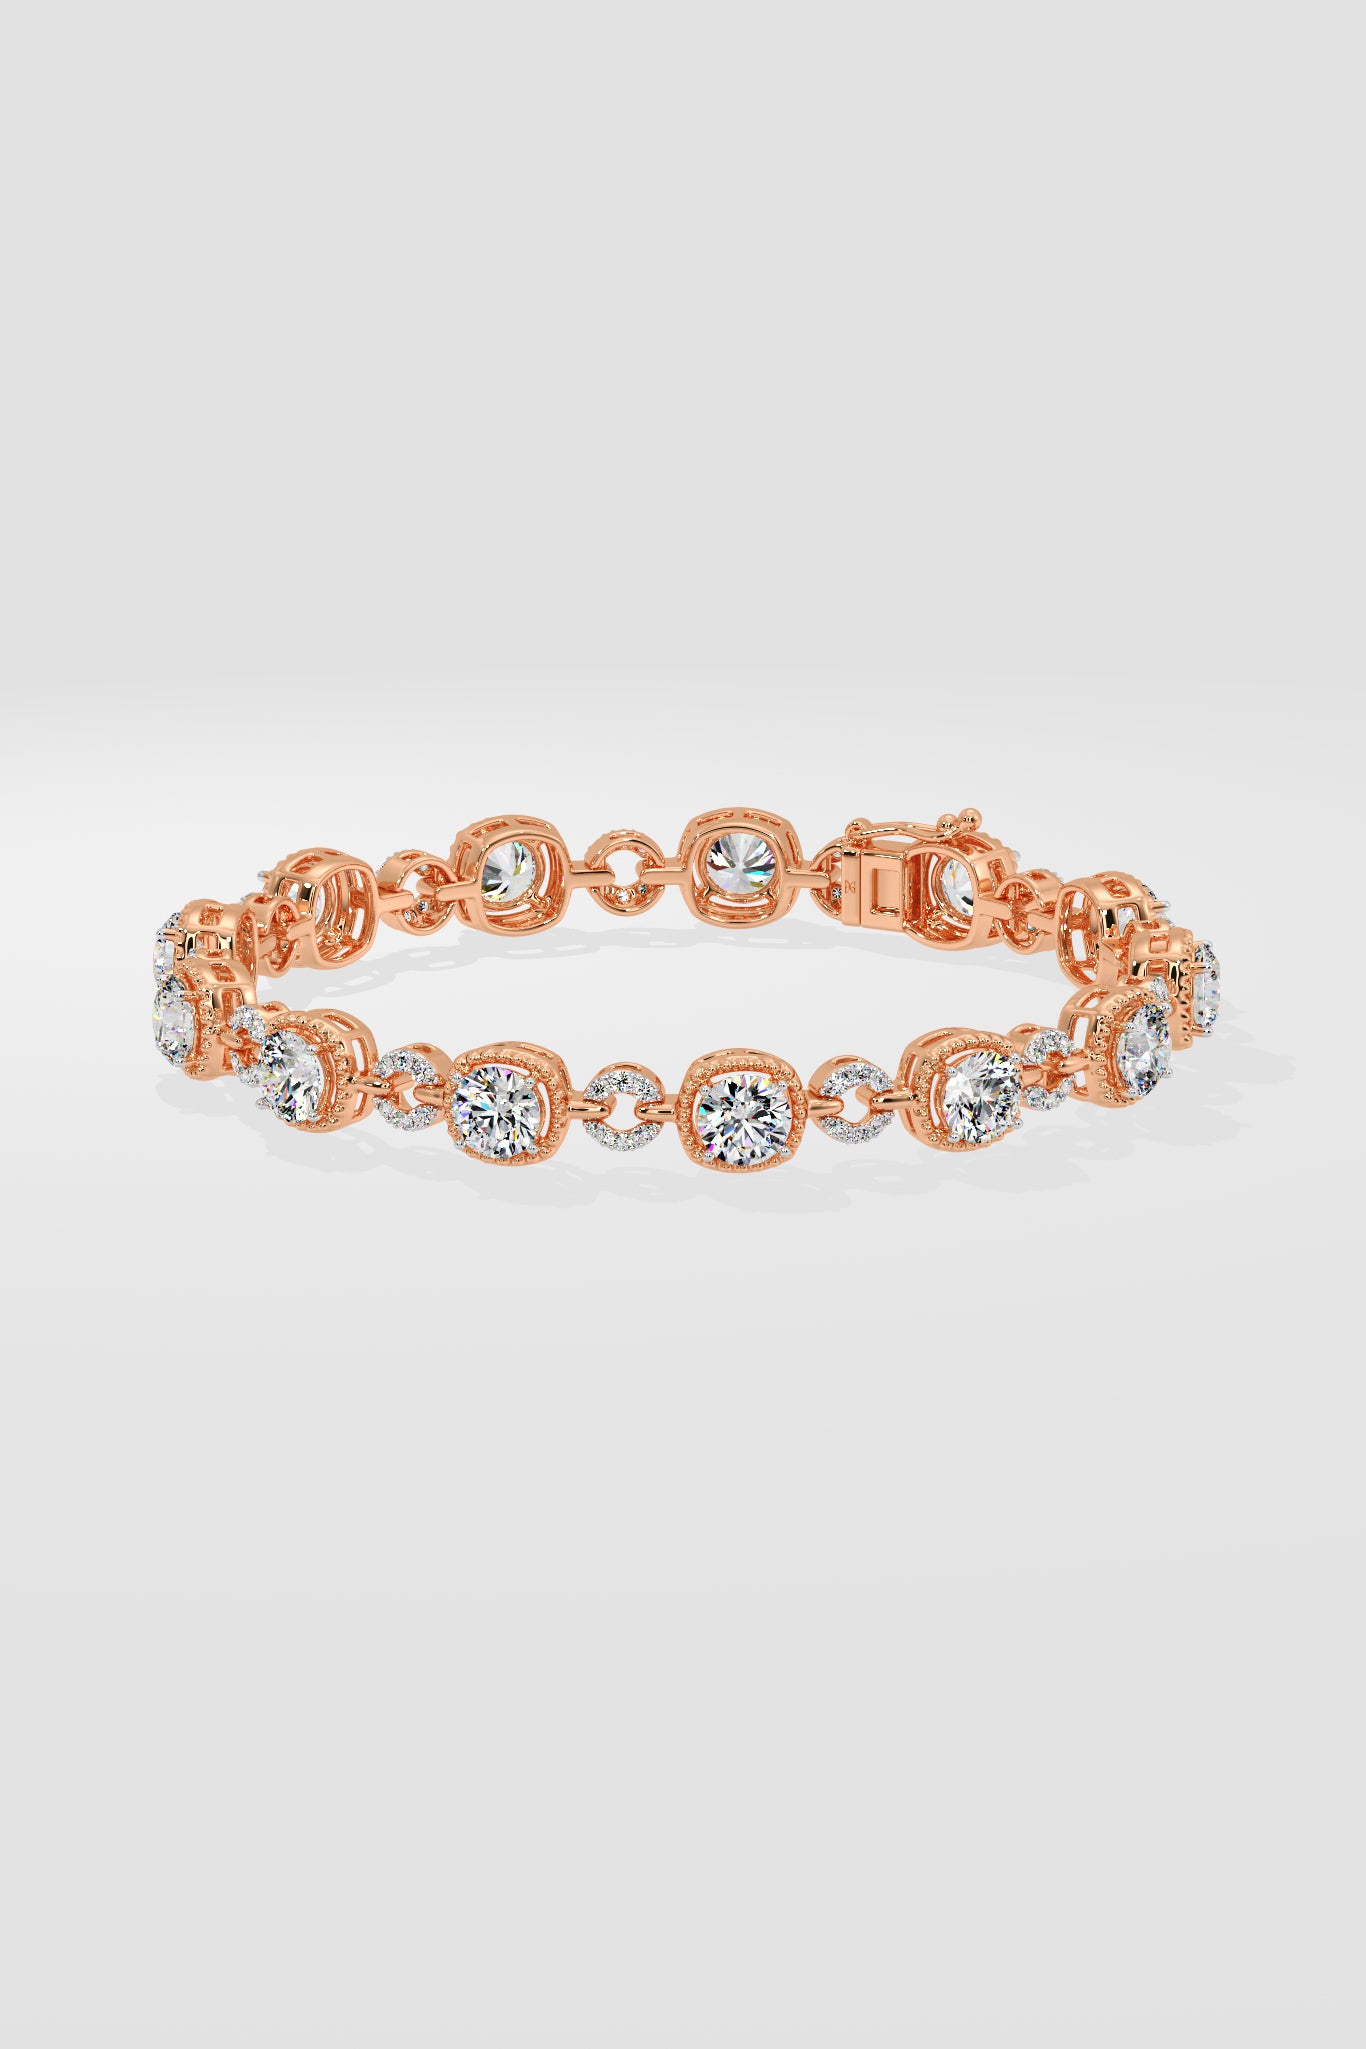 Athena Diamond Bracelet